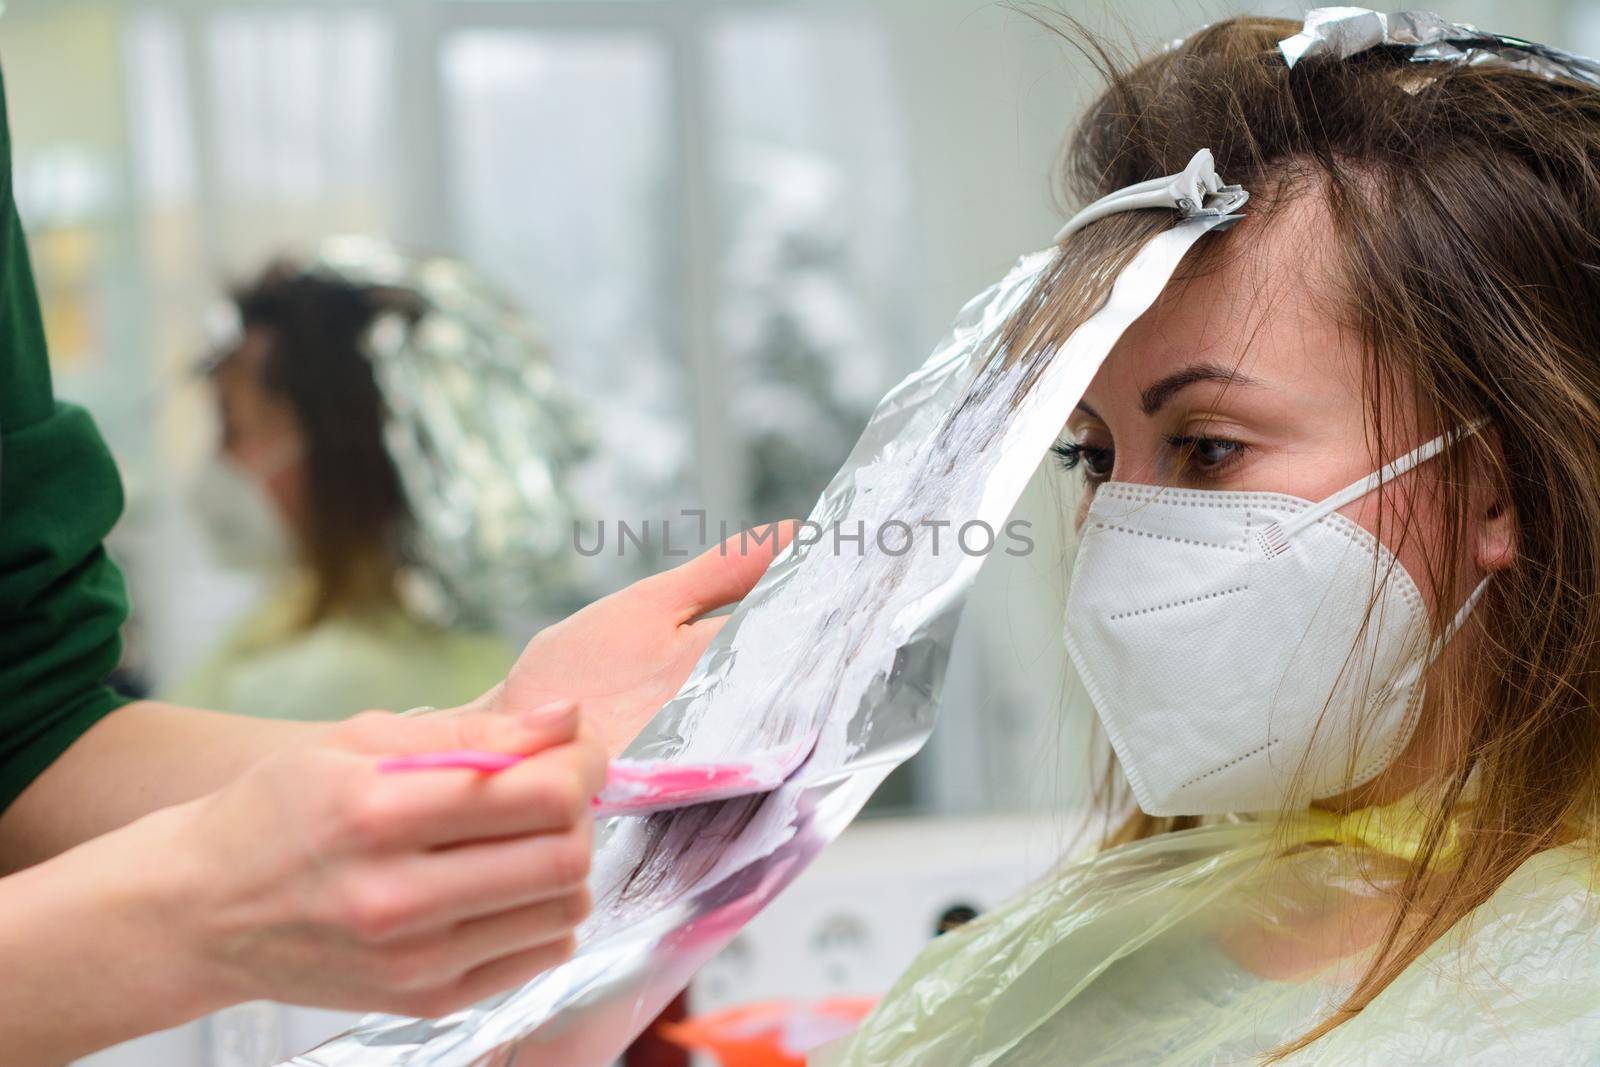 Hair coloring in the salon, hair bleaching. by Niko_Cingaryuk